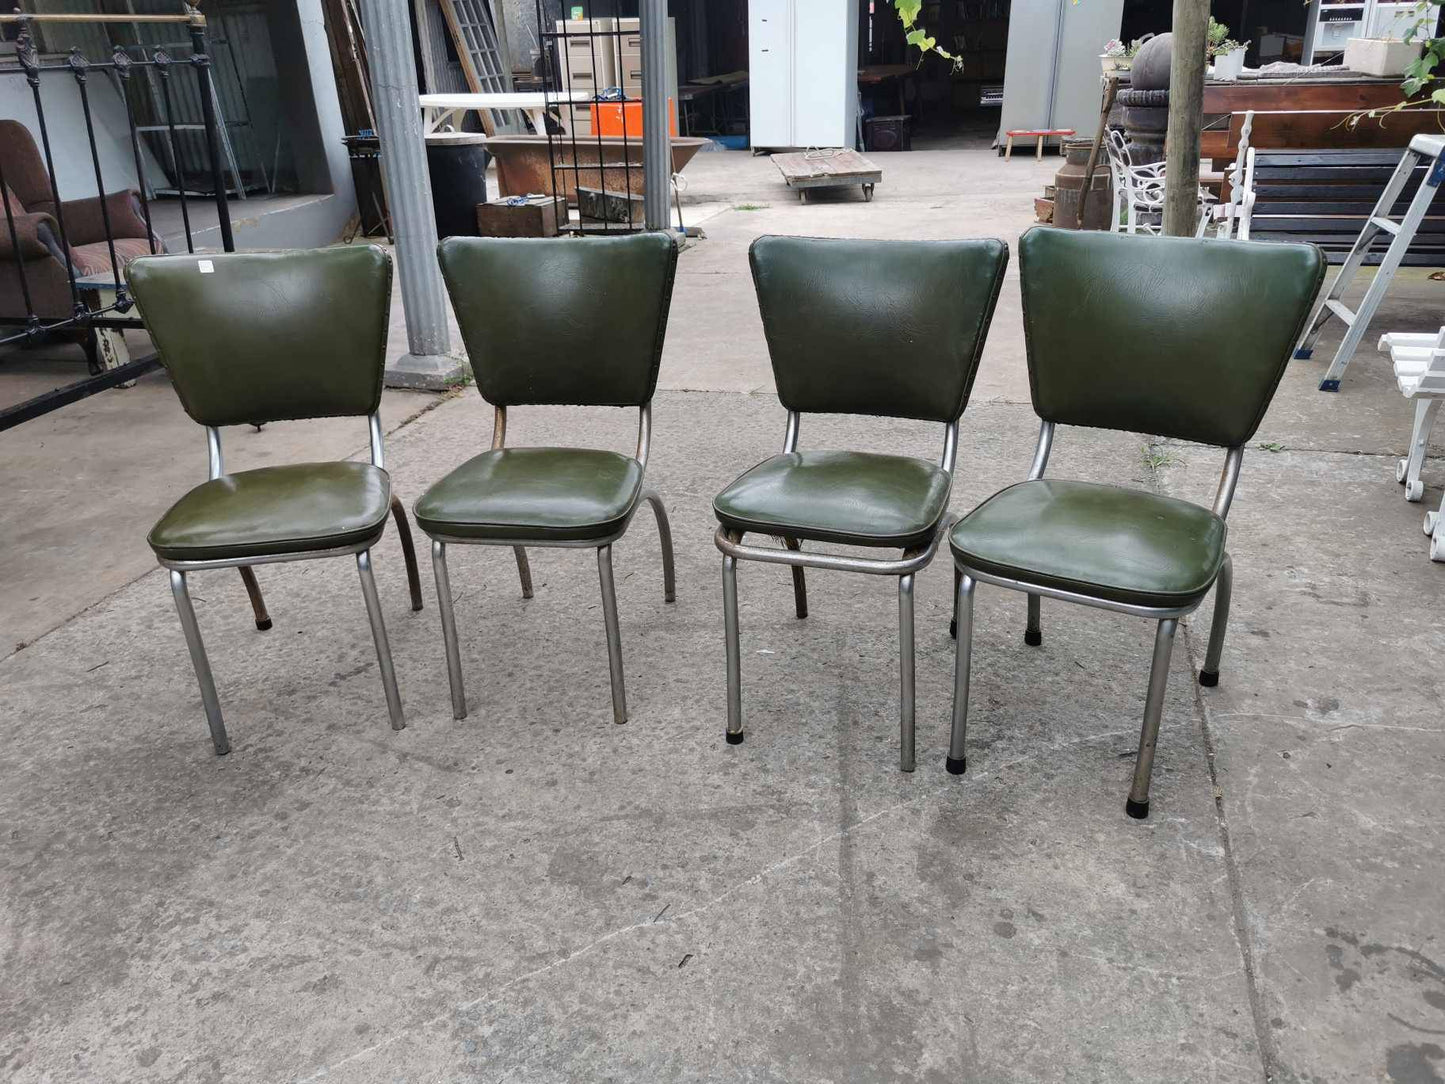 Set of 4 retro chairs